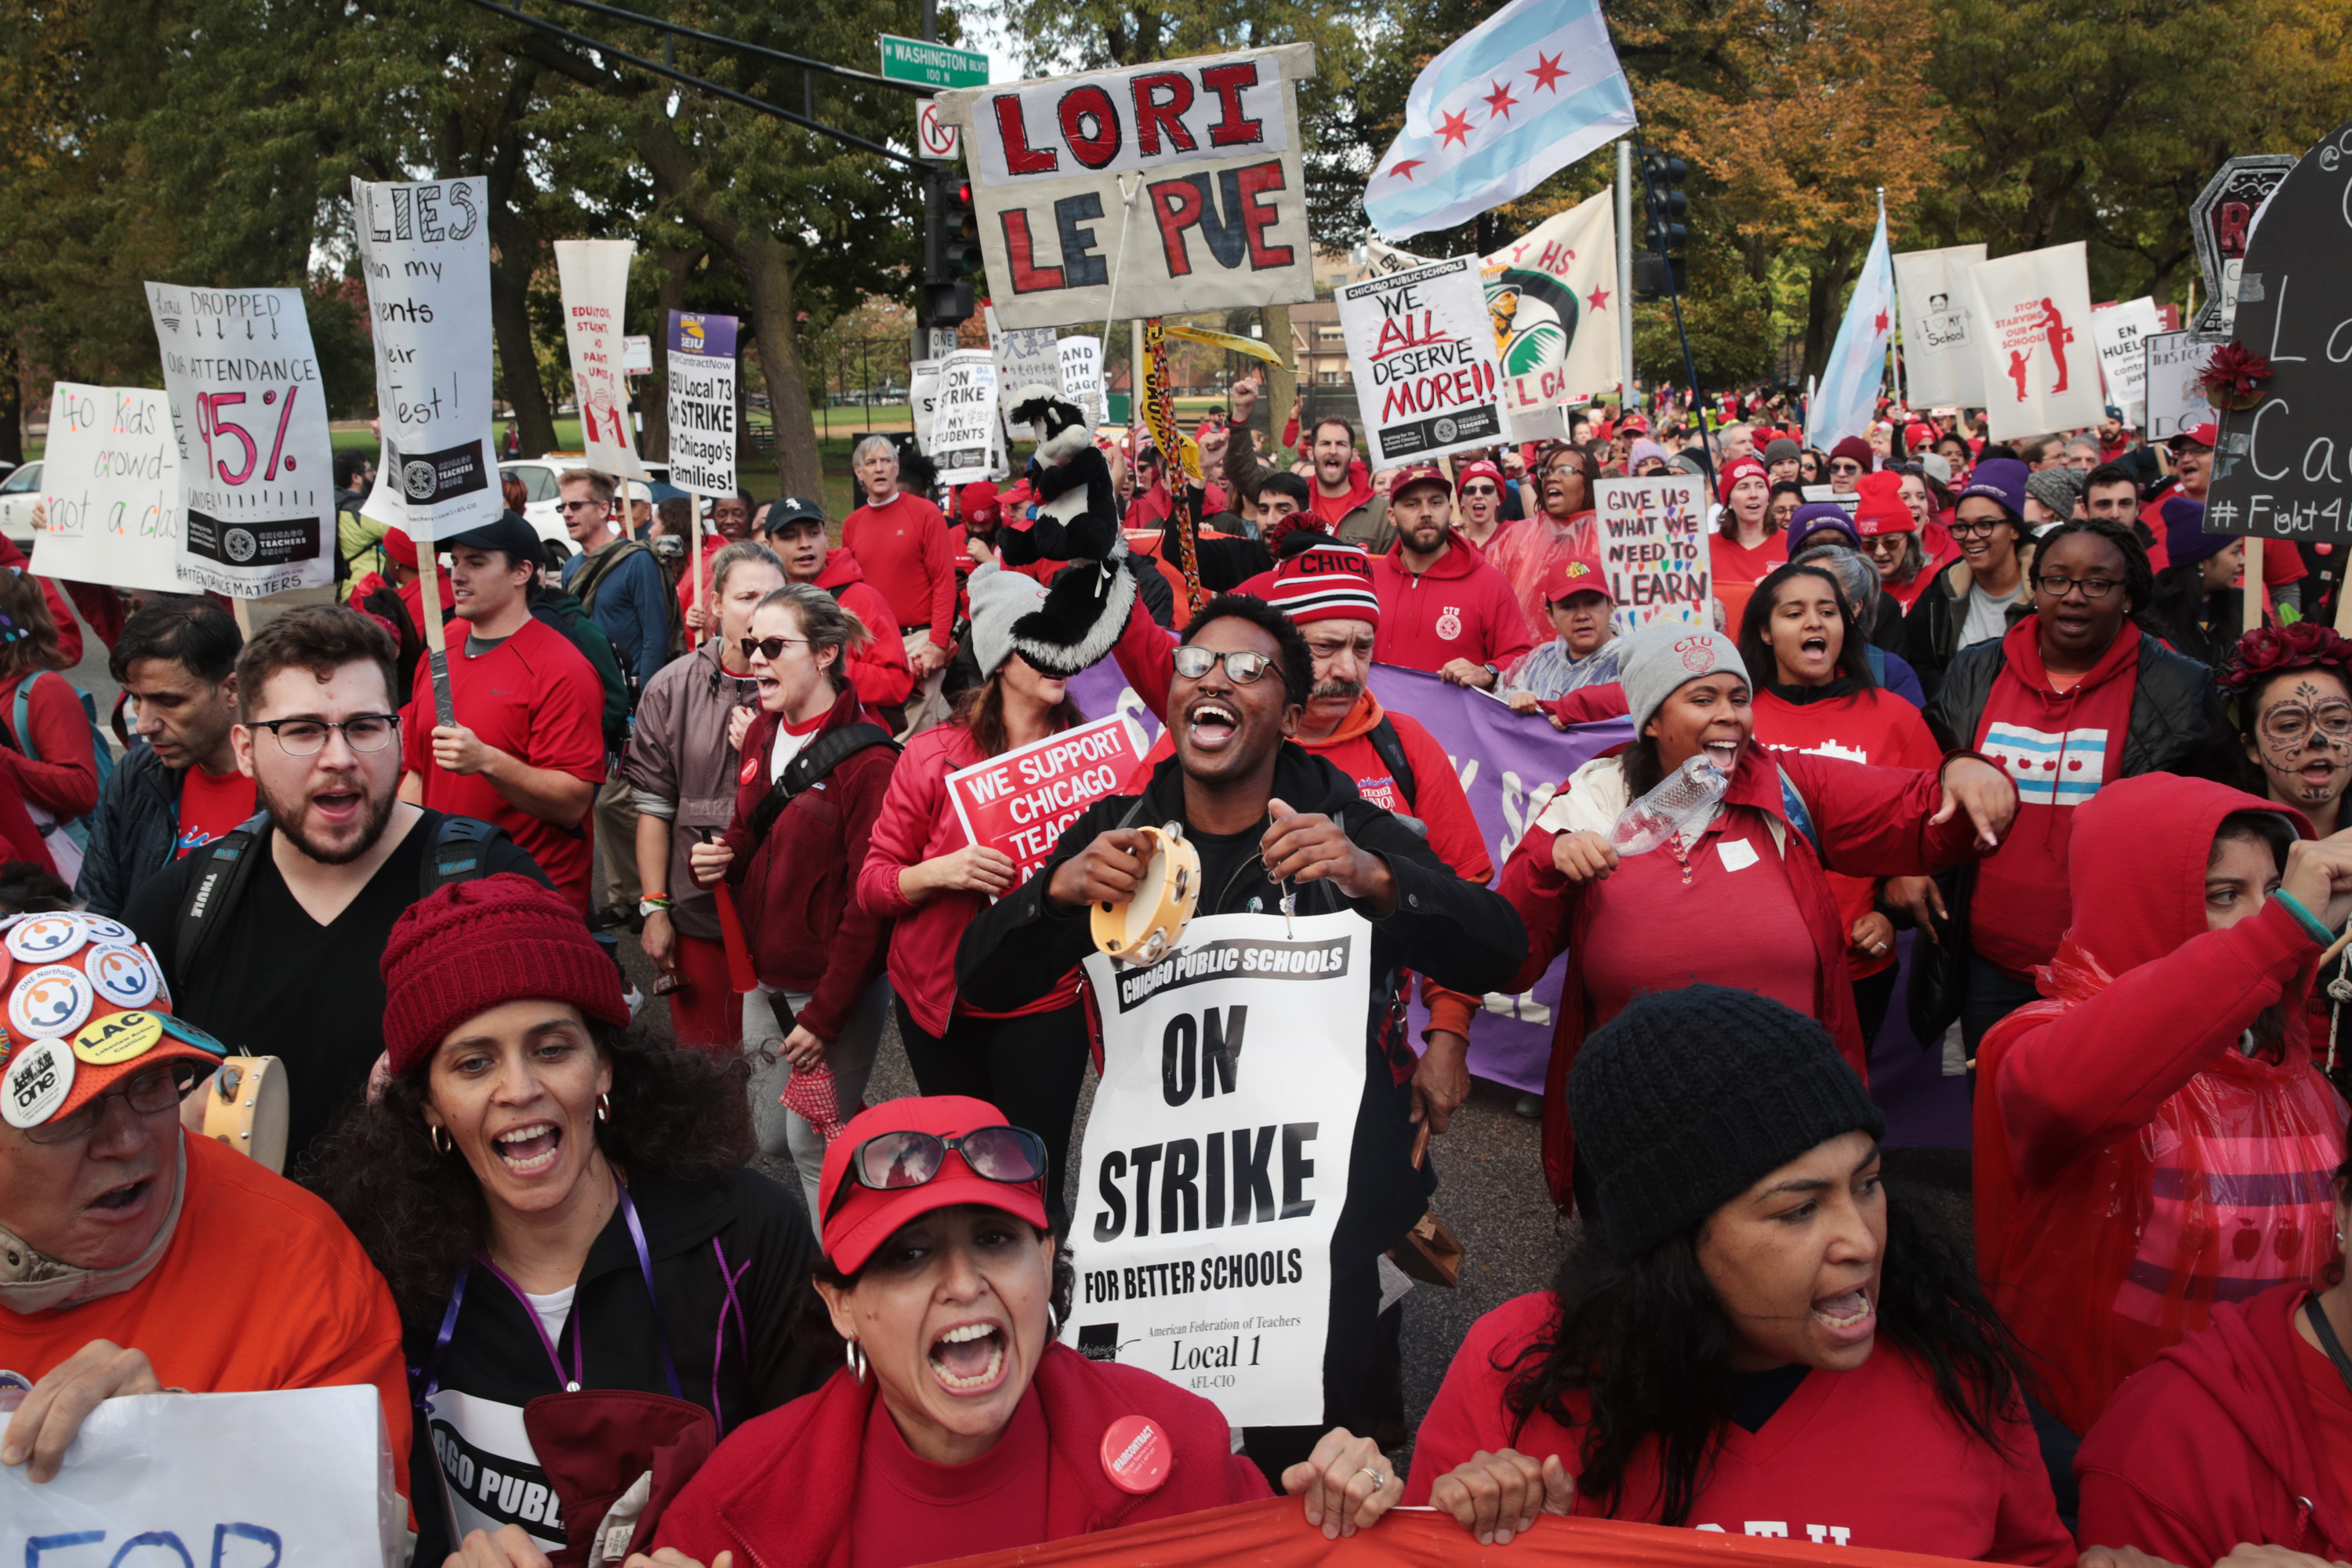 chicago teachers strike